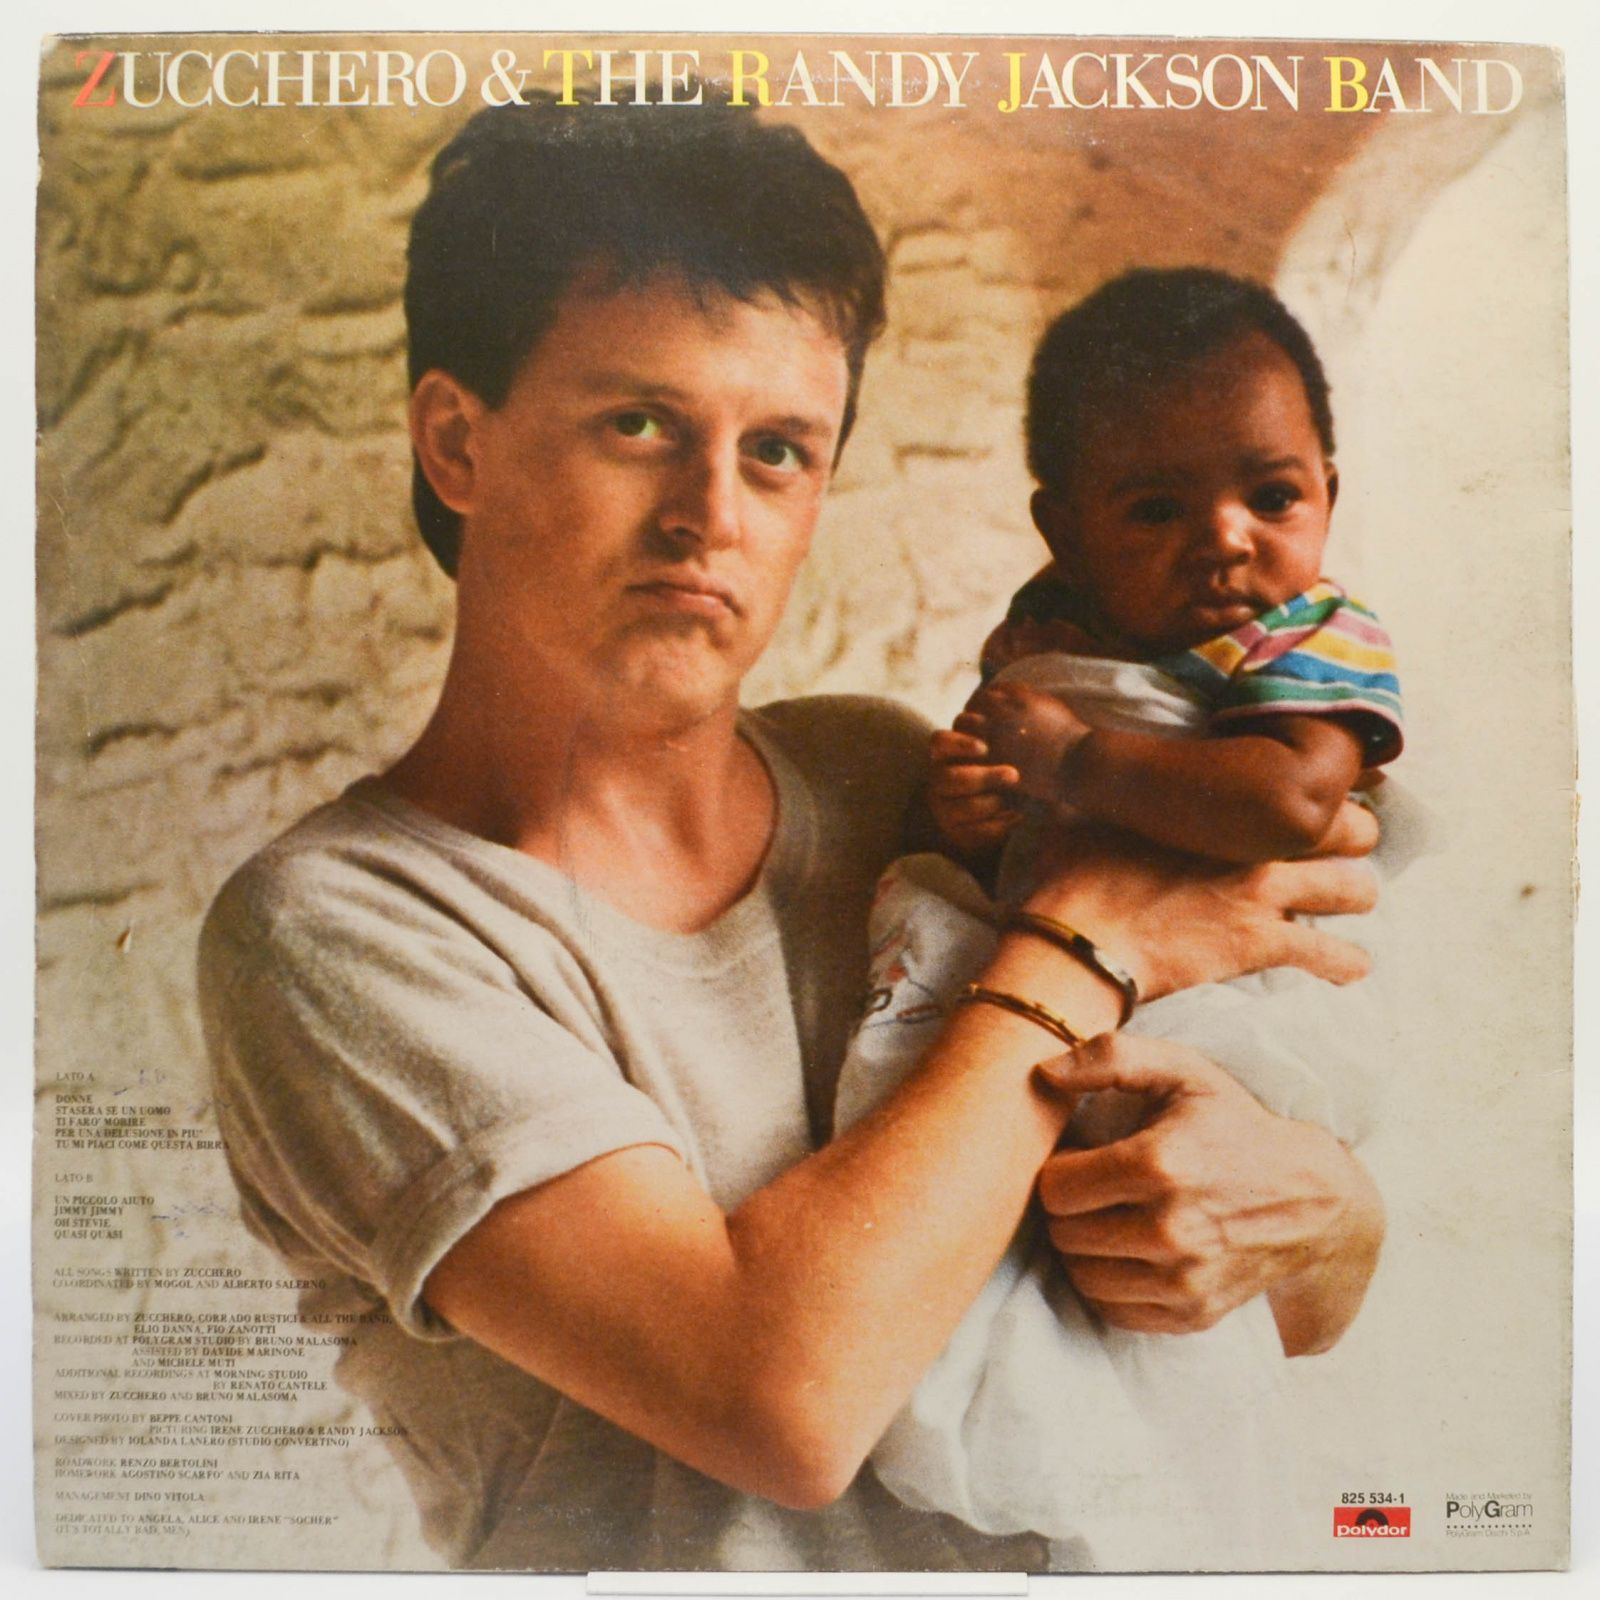 Zucchero & The Randy Jackson Band — Zucchero & The Randy Jackson Band, 1985